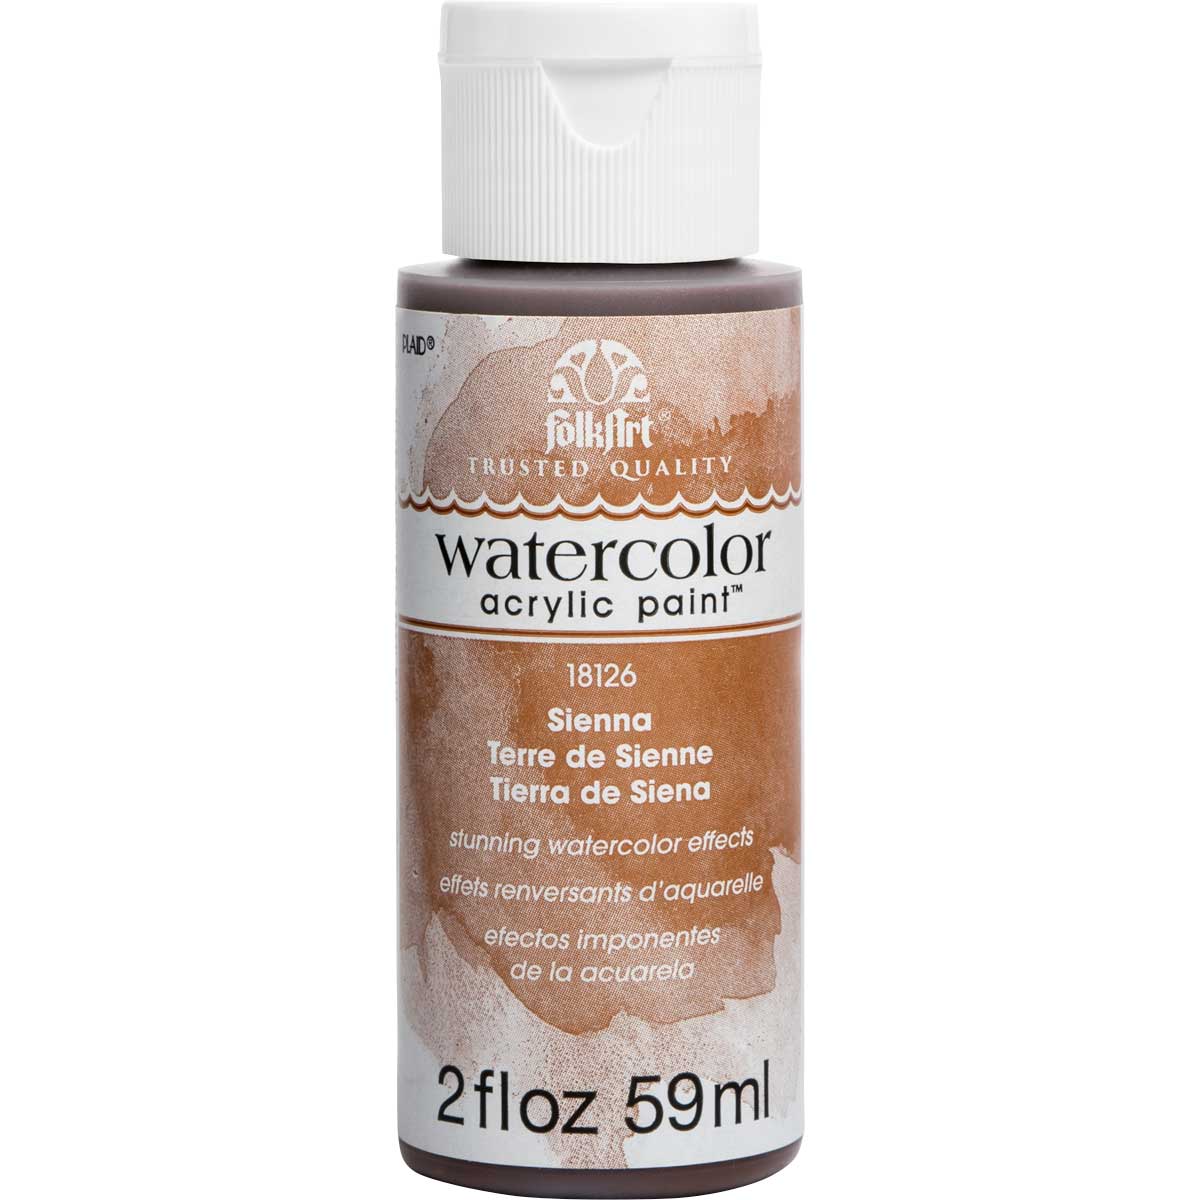 FolkArt ® Watercolor Acrylic Paint™ - Sienna, 2 oz. - 18126